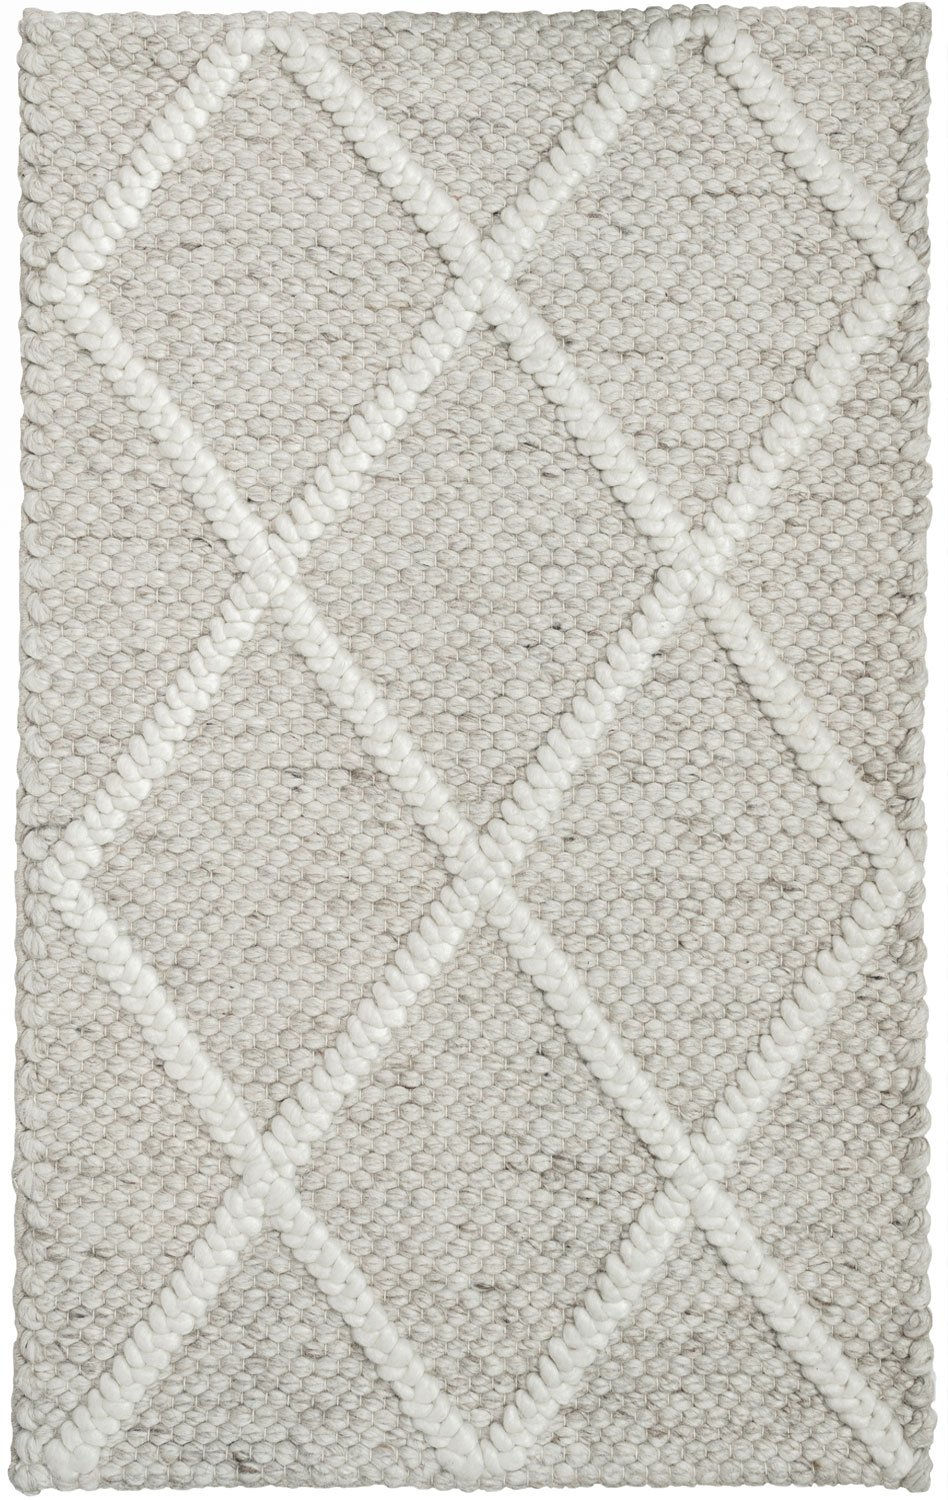 Handwoven Textured Wool Viscose Rug, Textured Wool Rug Ivory